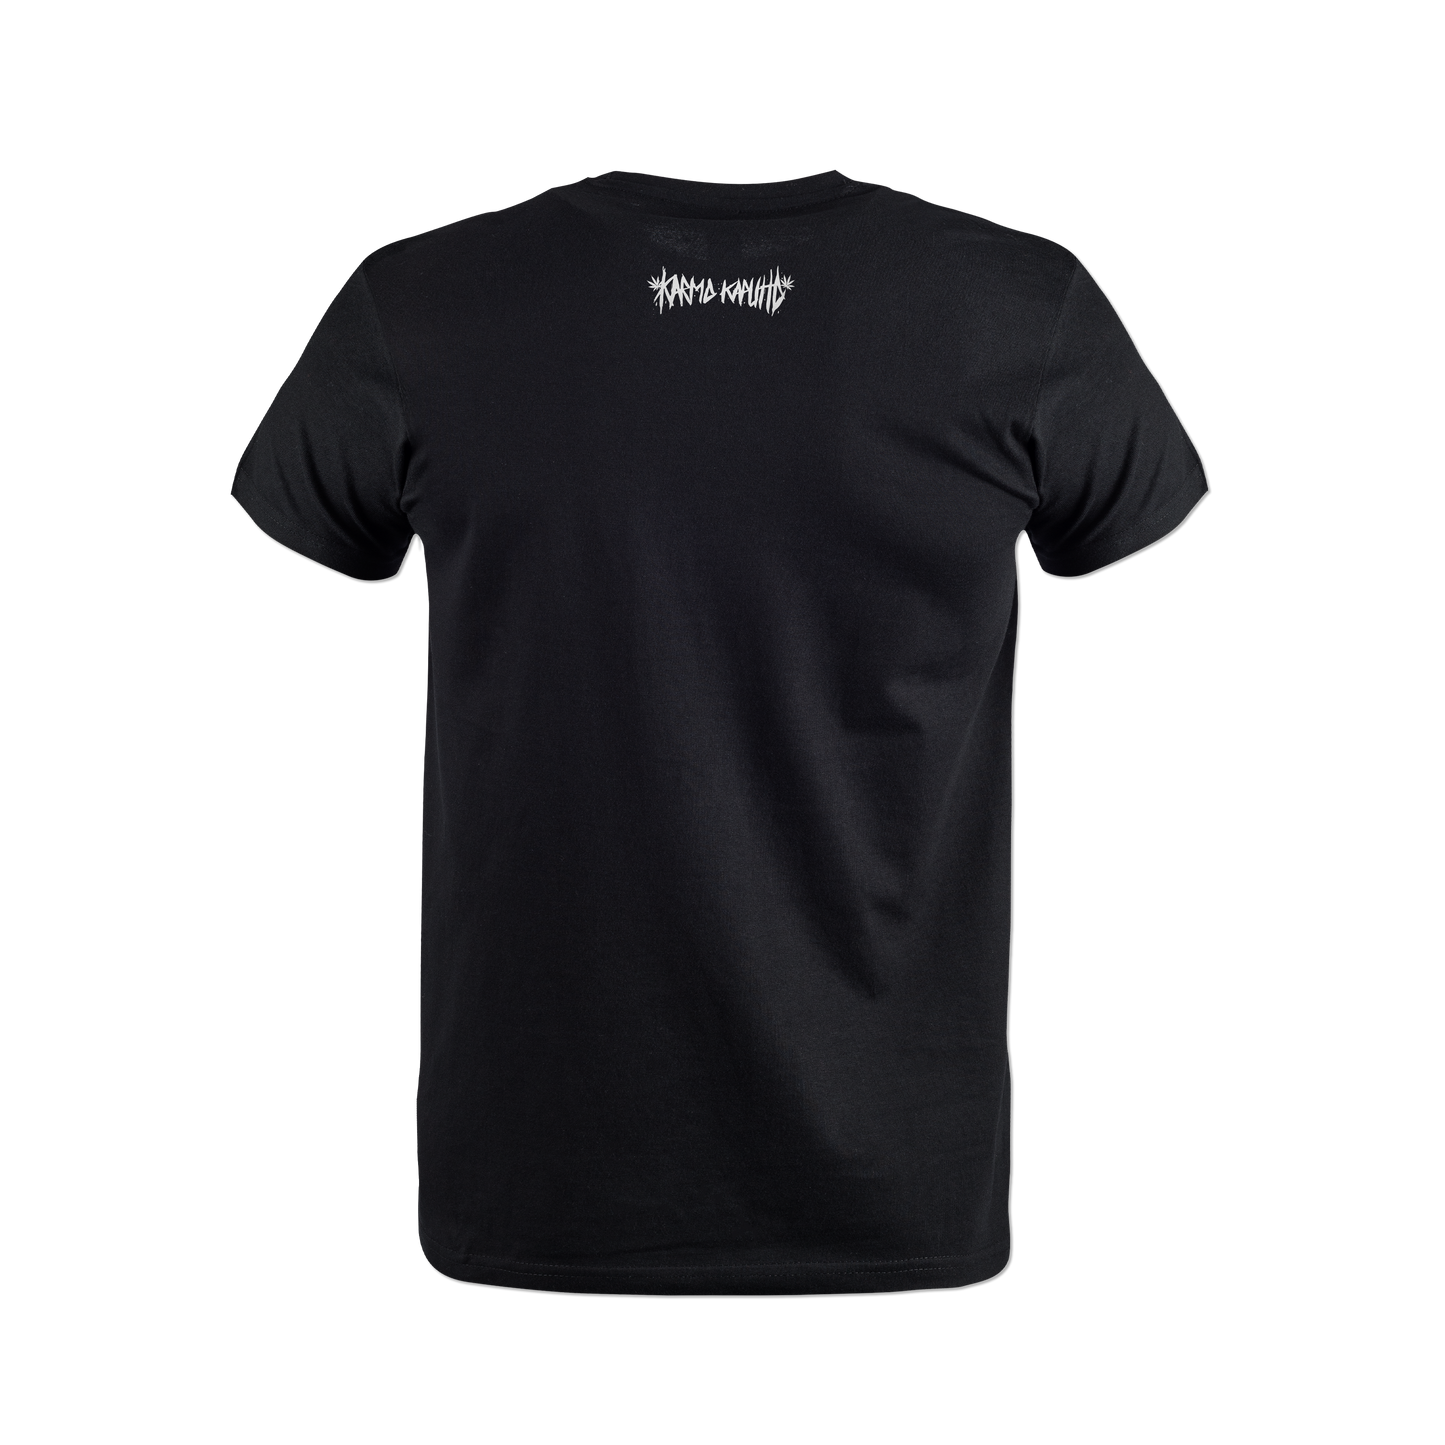 "Dicke Knollen" T-Shirt black edit.